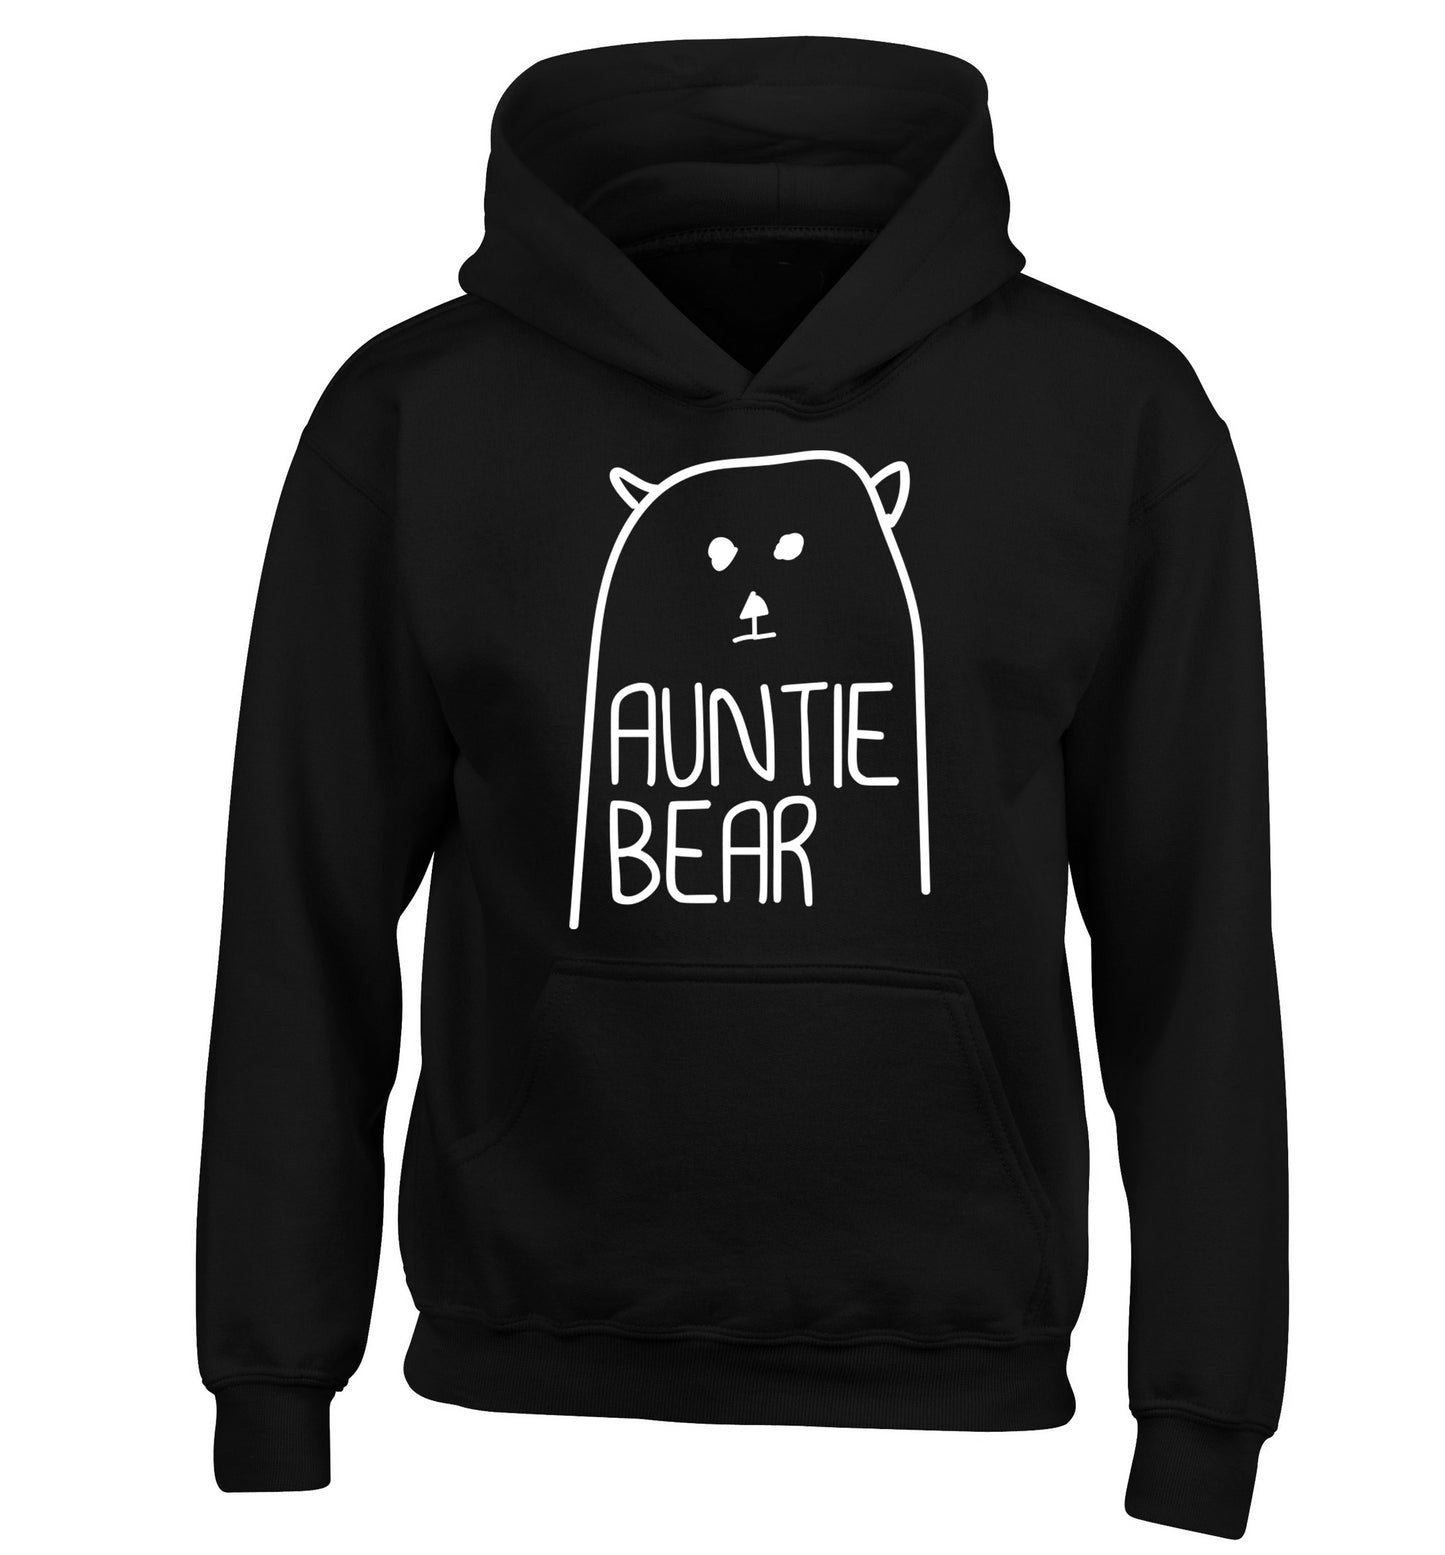 Auntie bear children's black hoodie 12-13 Years